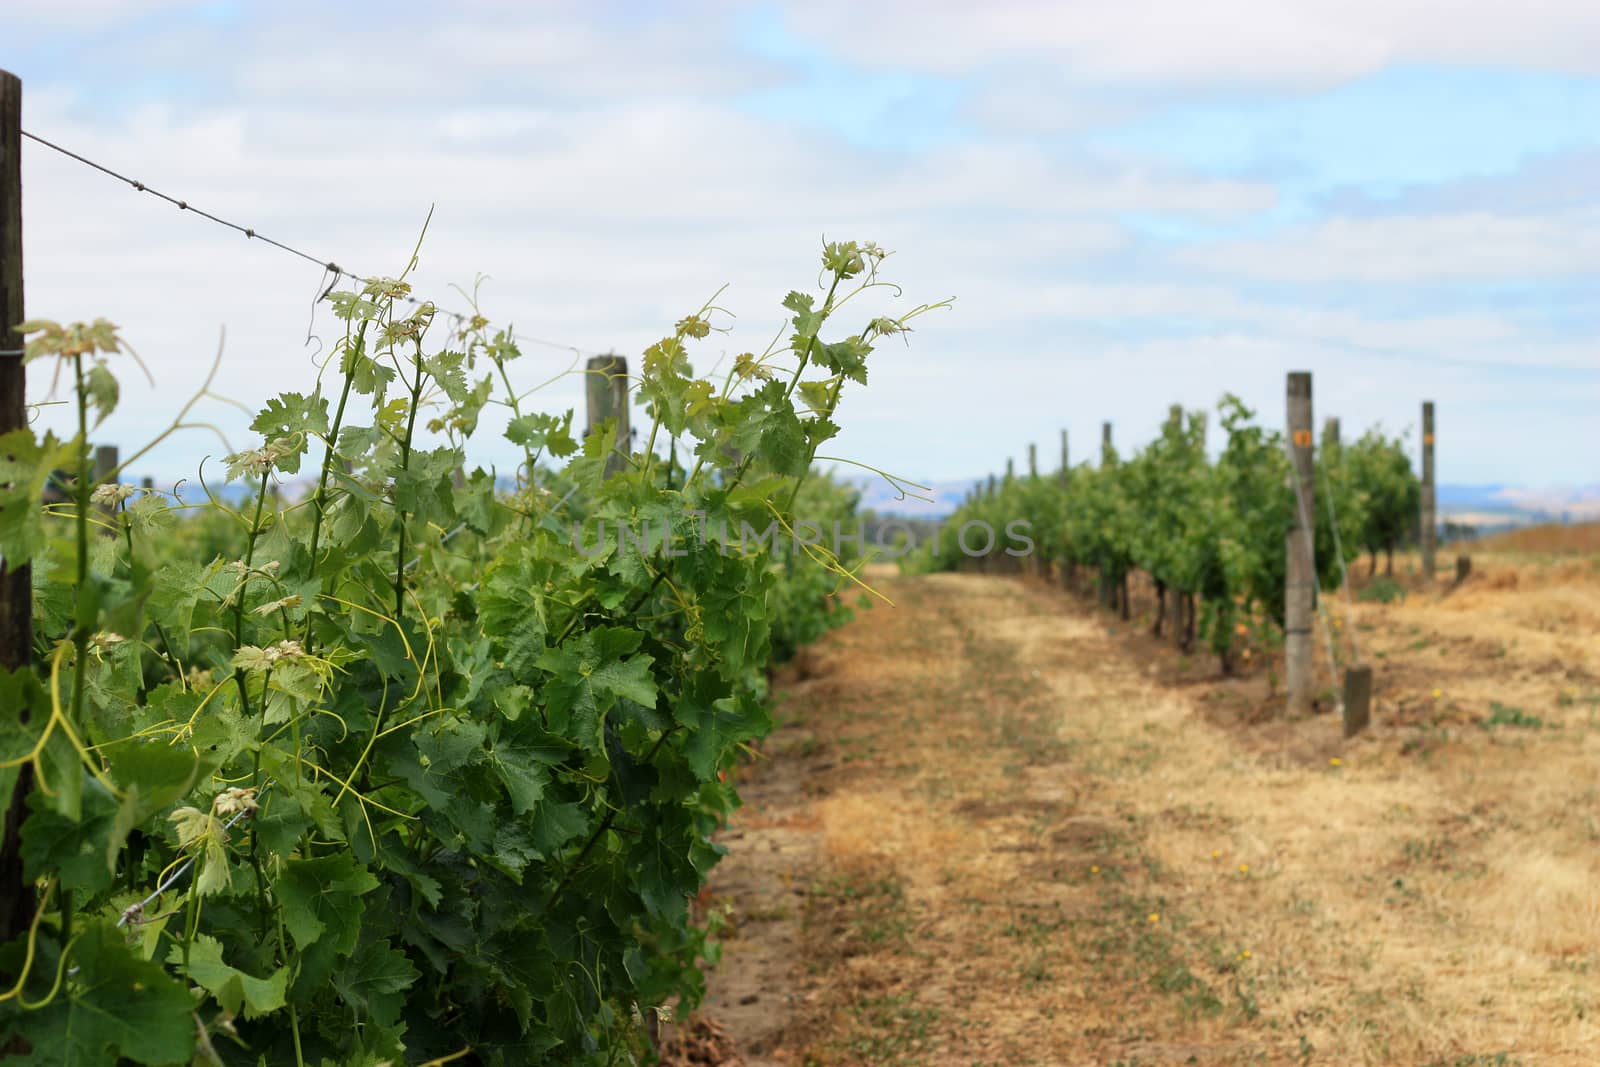 Scene of grape vineyard in Napa Valley by ziss